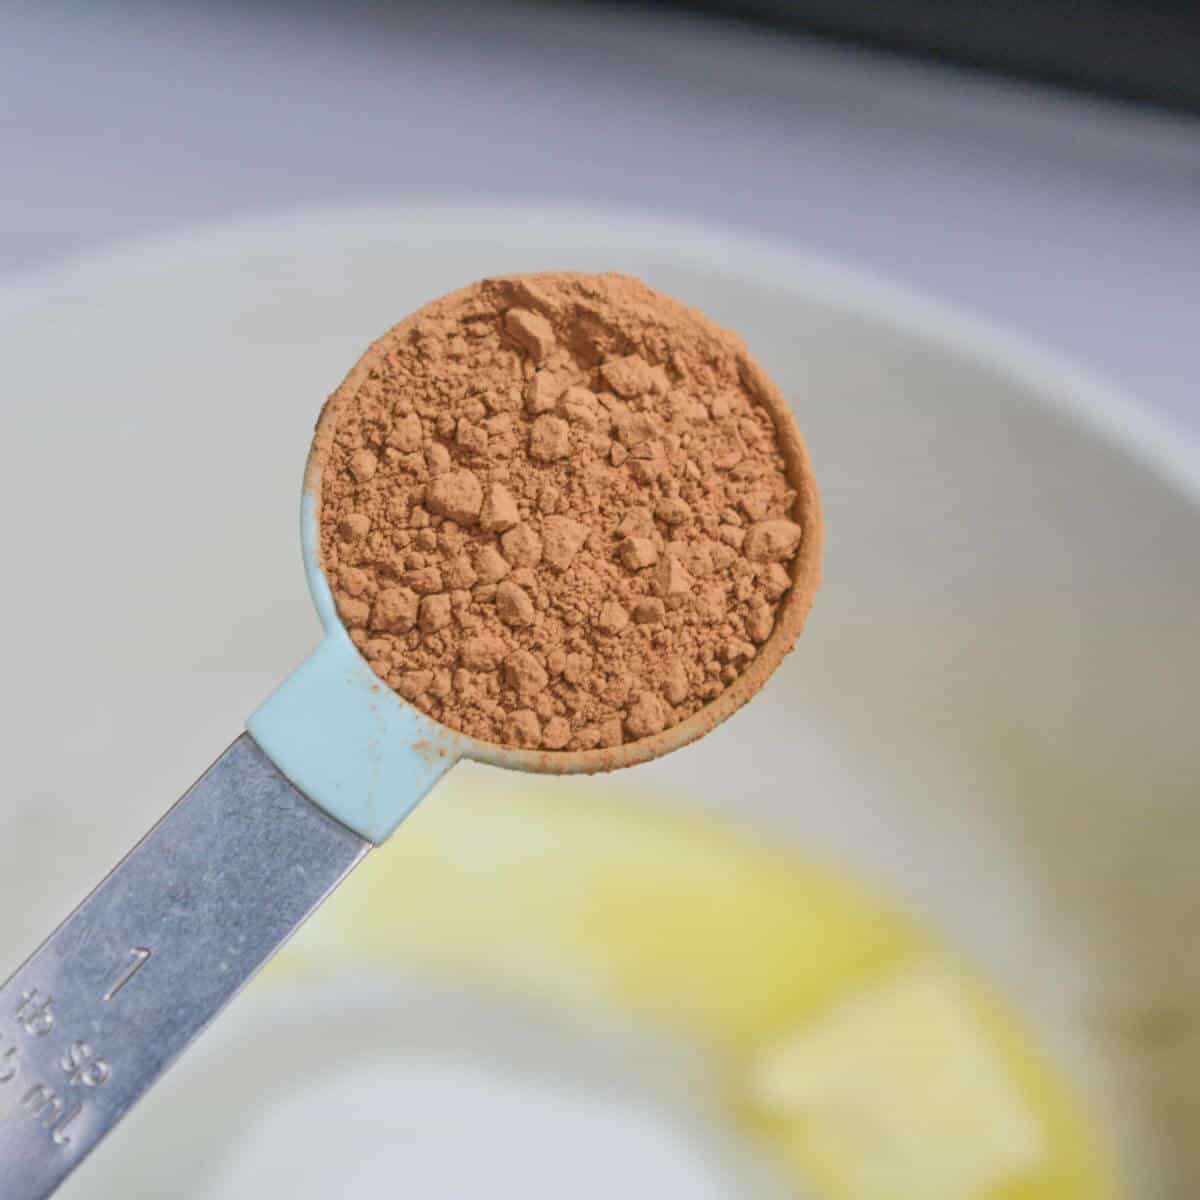 adding unsweetened cocoa powder.